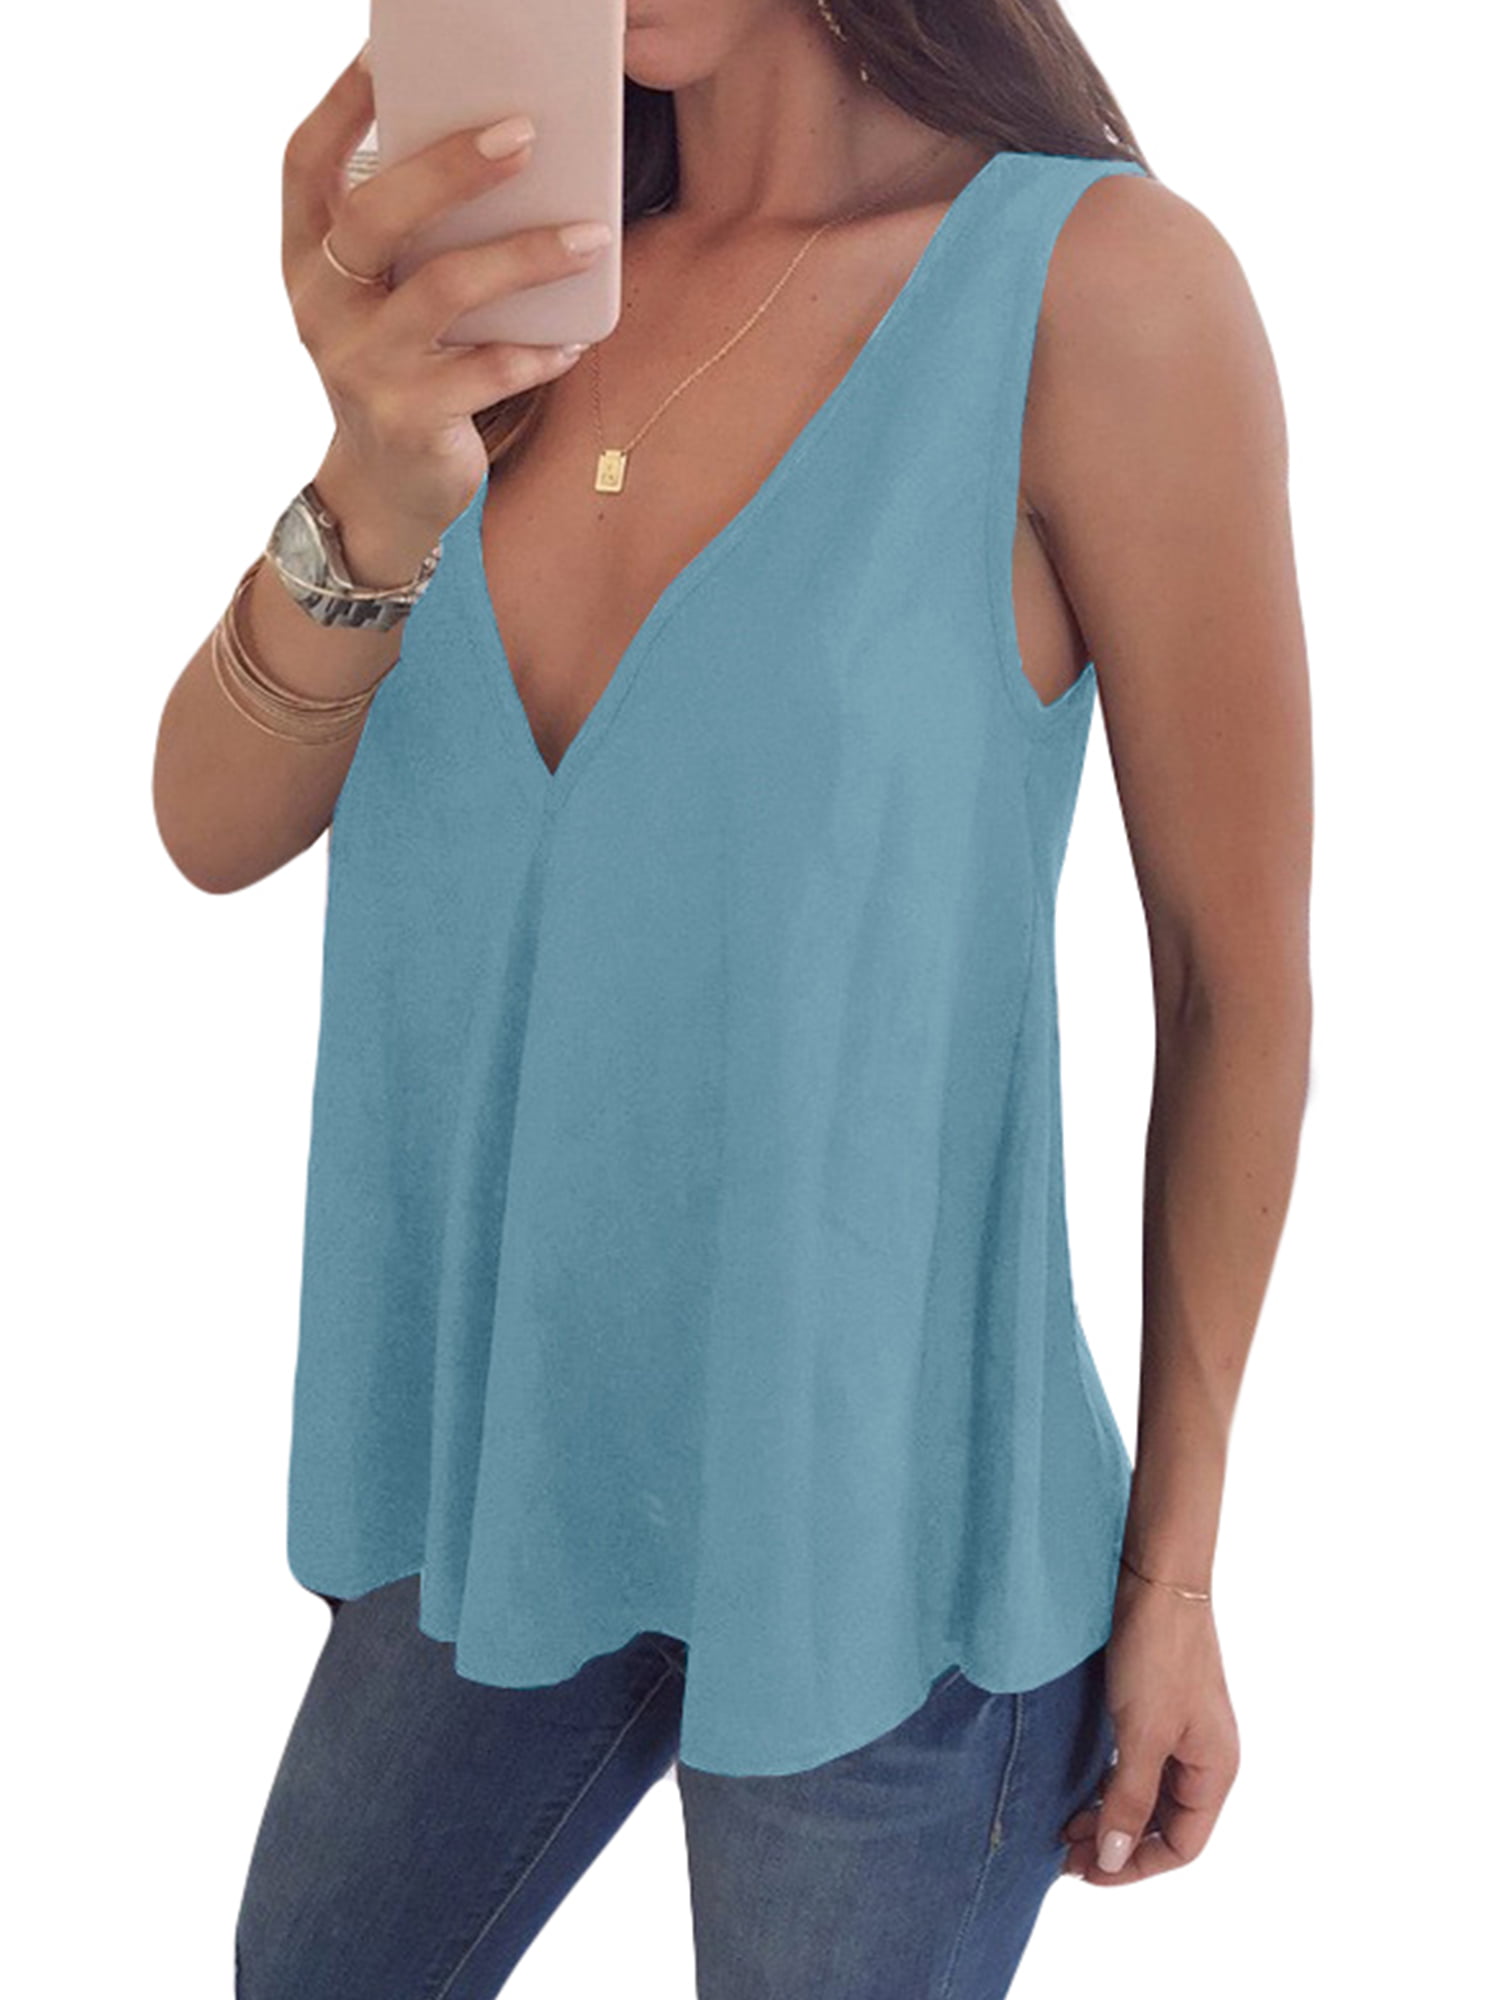 Women Plus Size Blouse Shirt Tops O-Neck Sleeveless Pure Color Lace Vest Tops Summer Loose T-Shirt Blouse 